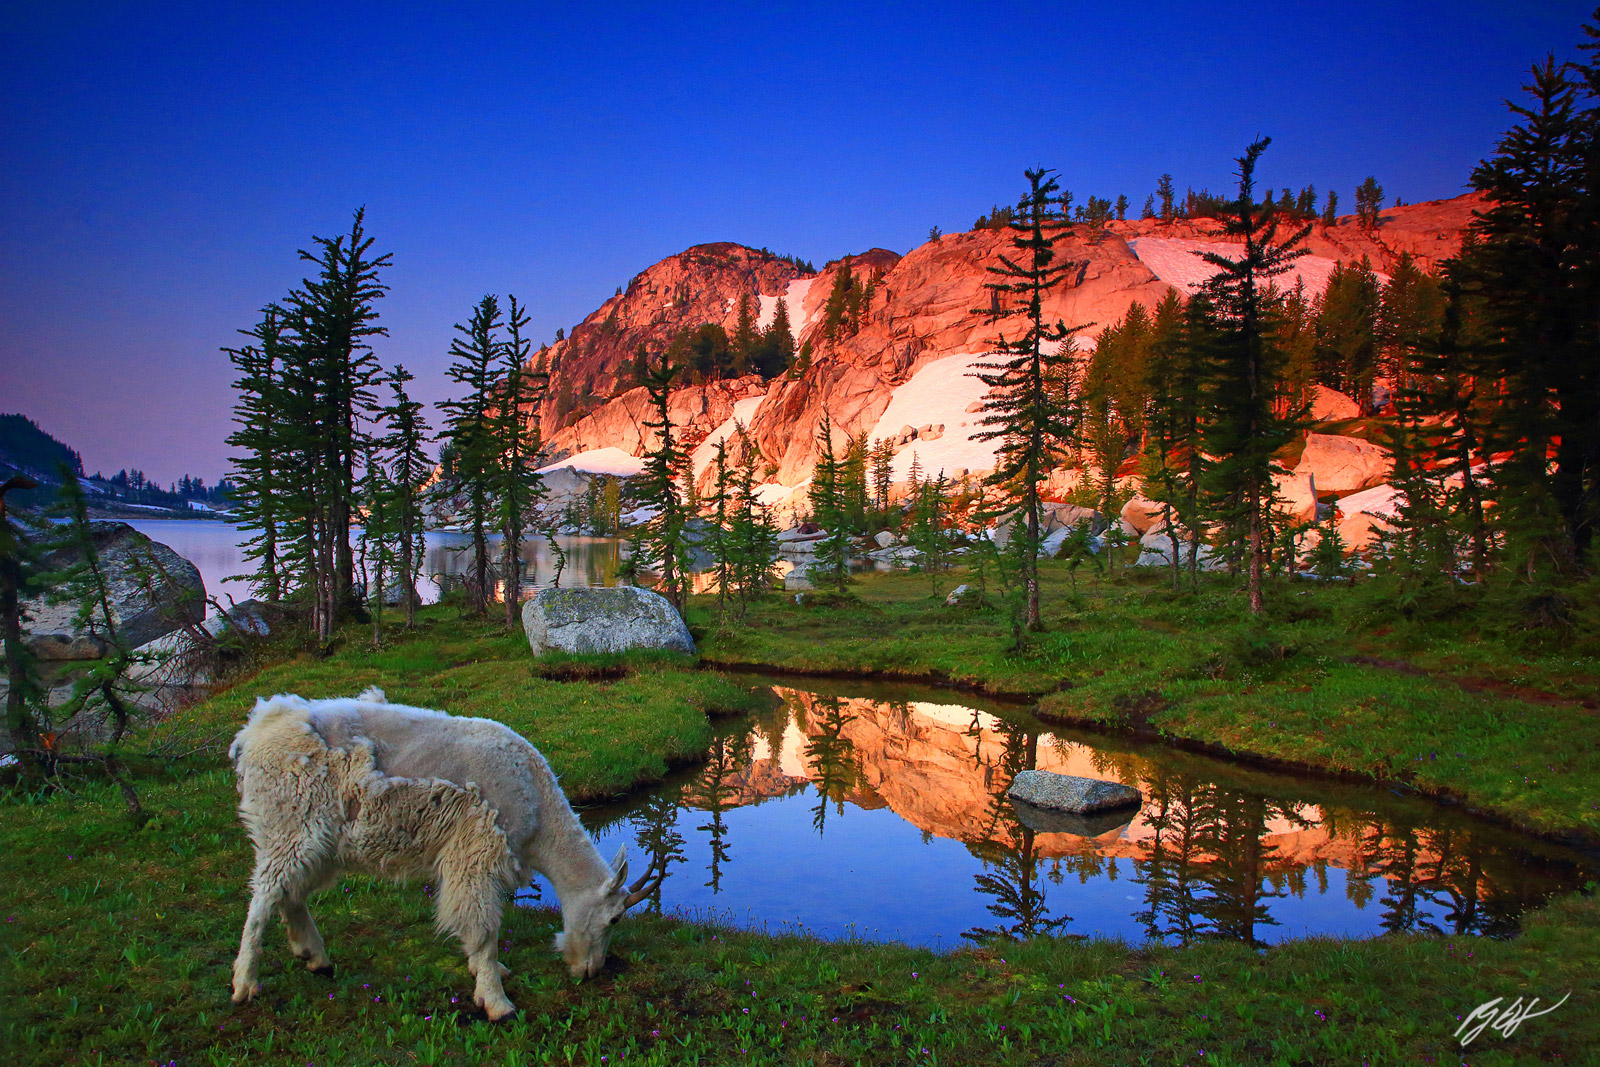 Photo Bombed by a Mountain Goat, Enchantments, Alpine Lakes Wilderness, Washington